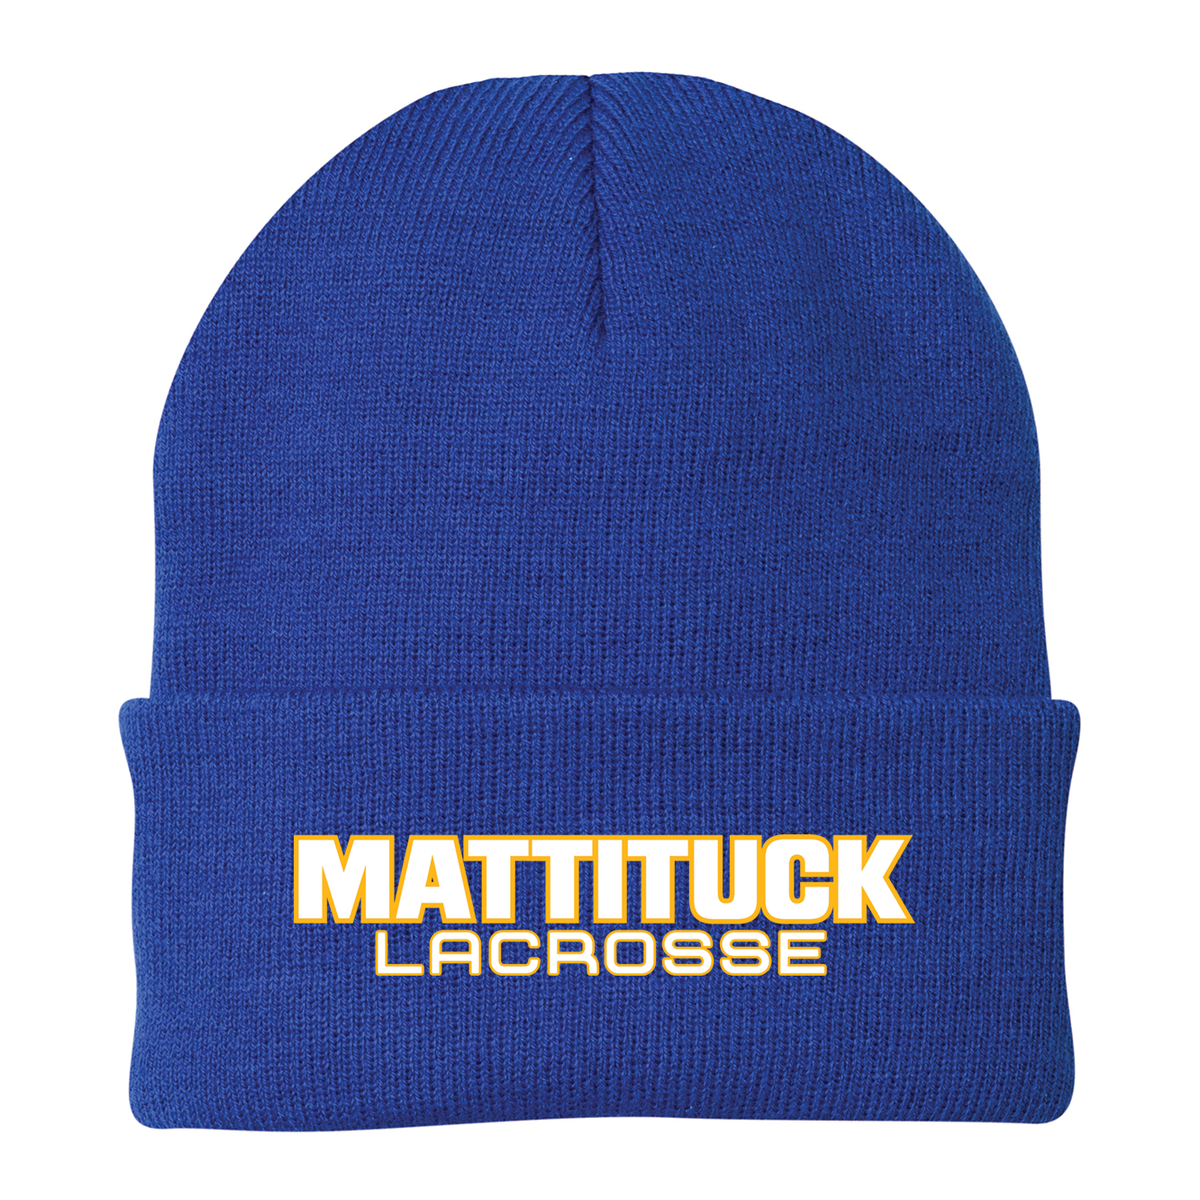 Mattituck Lacrosse Knit Beanie